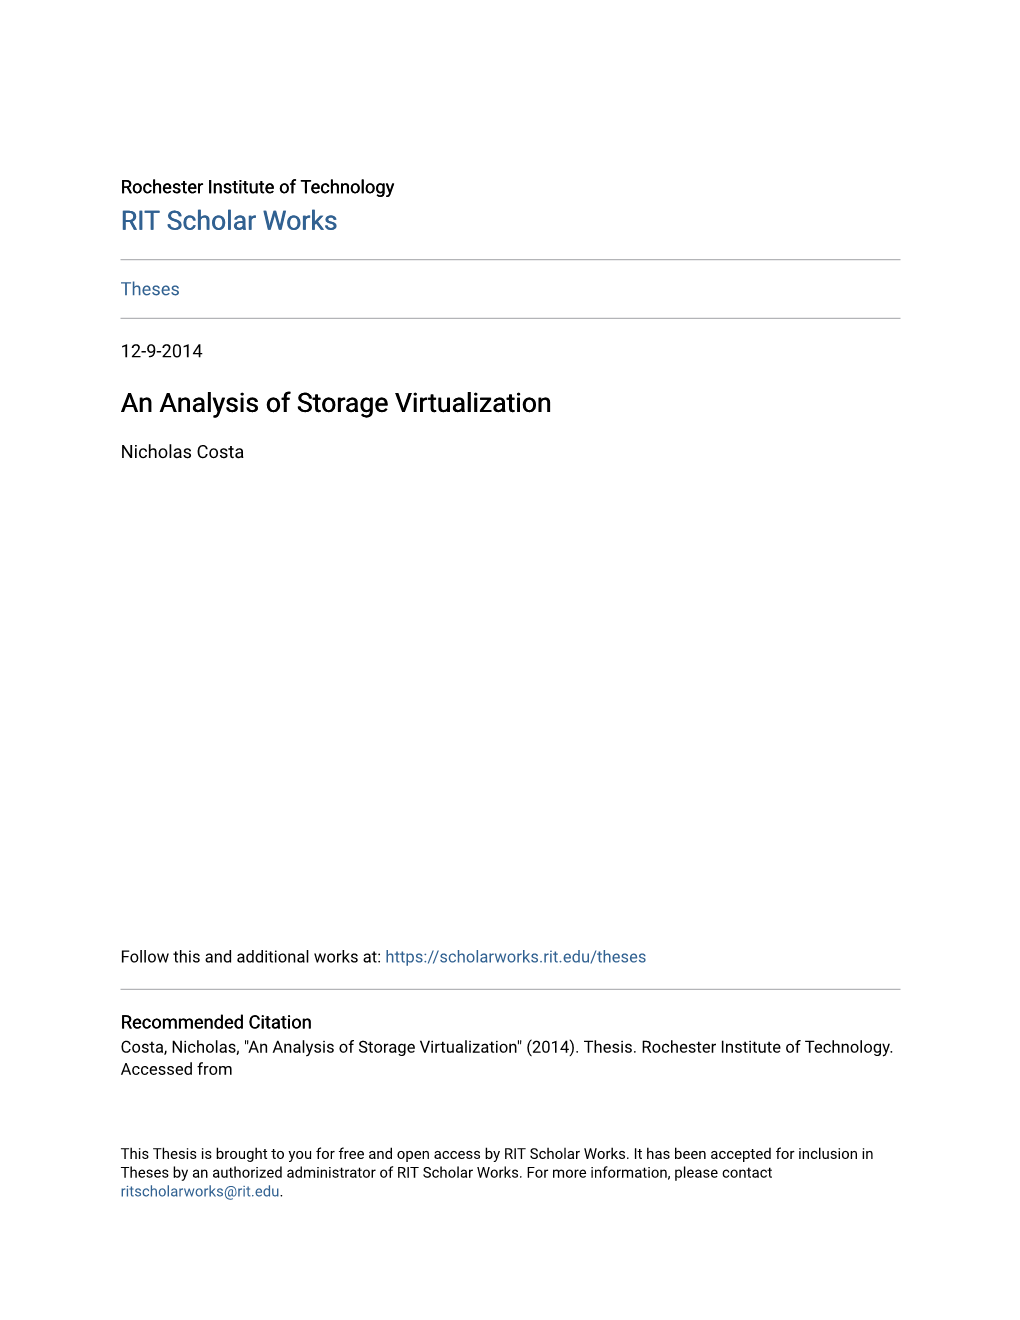 An Analysis of Storage Virtualization